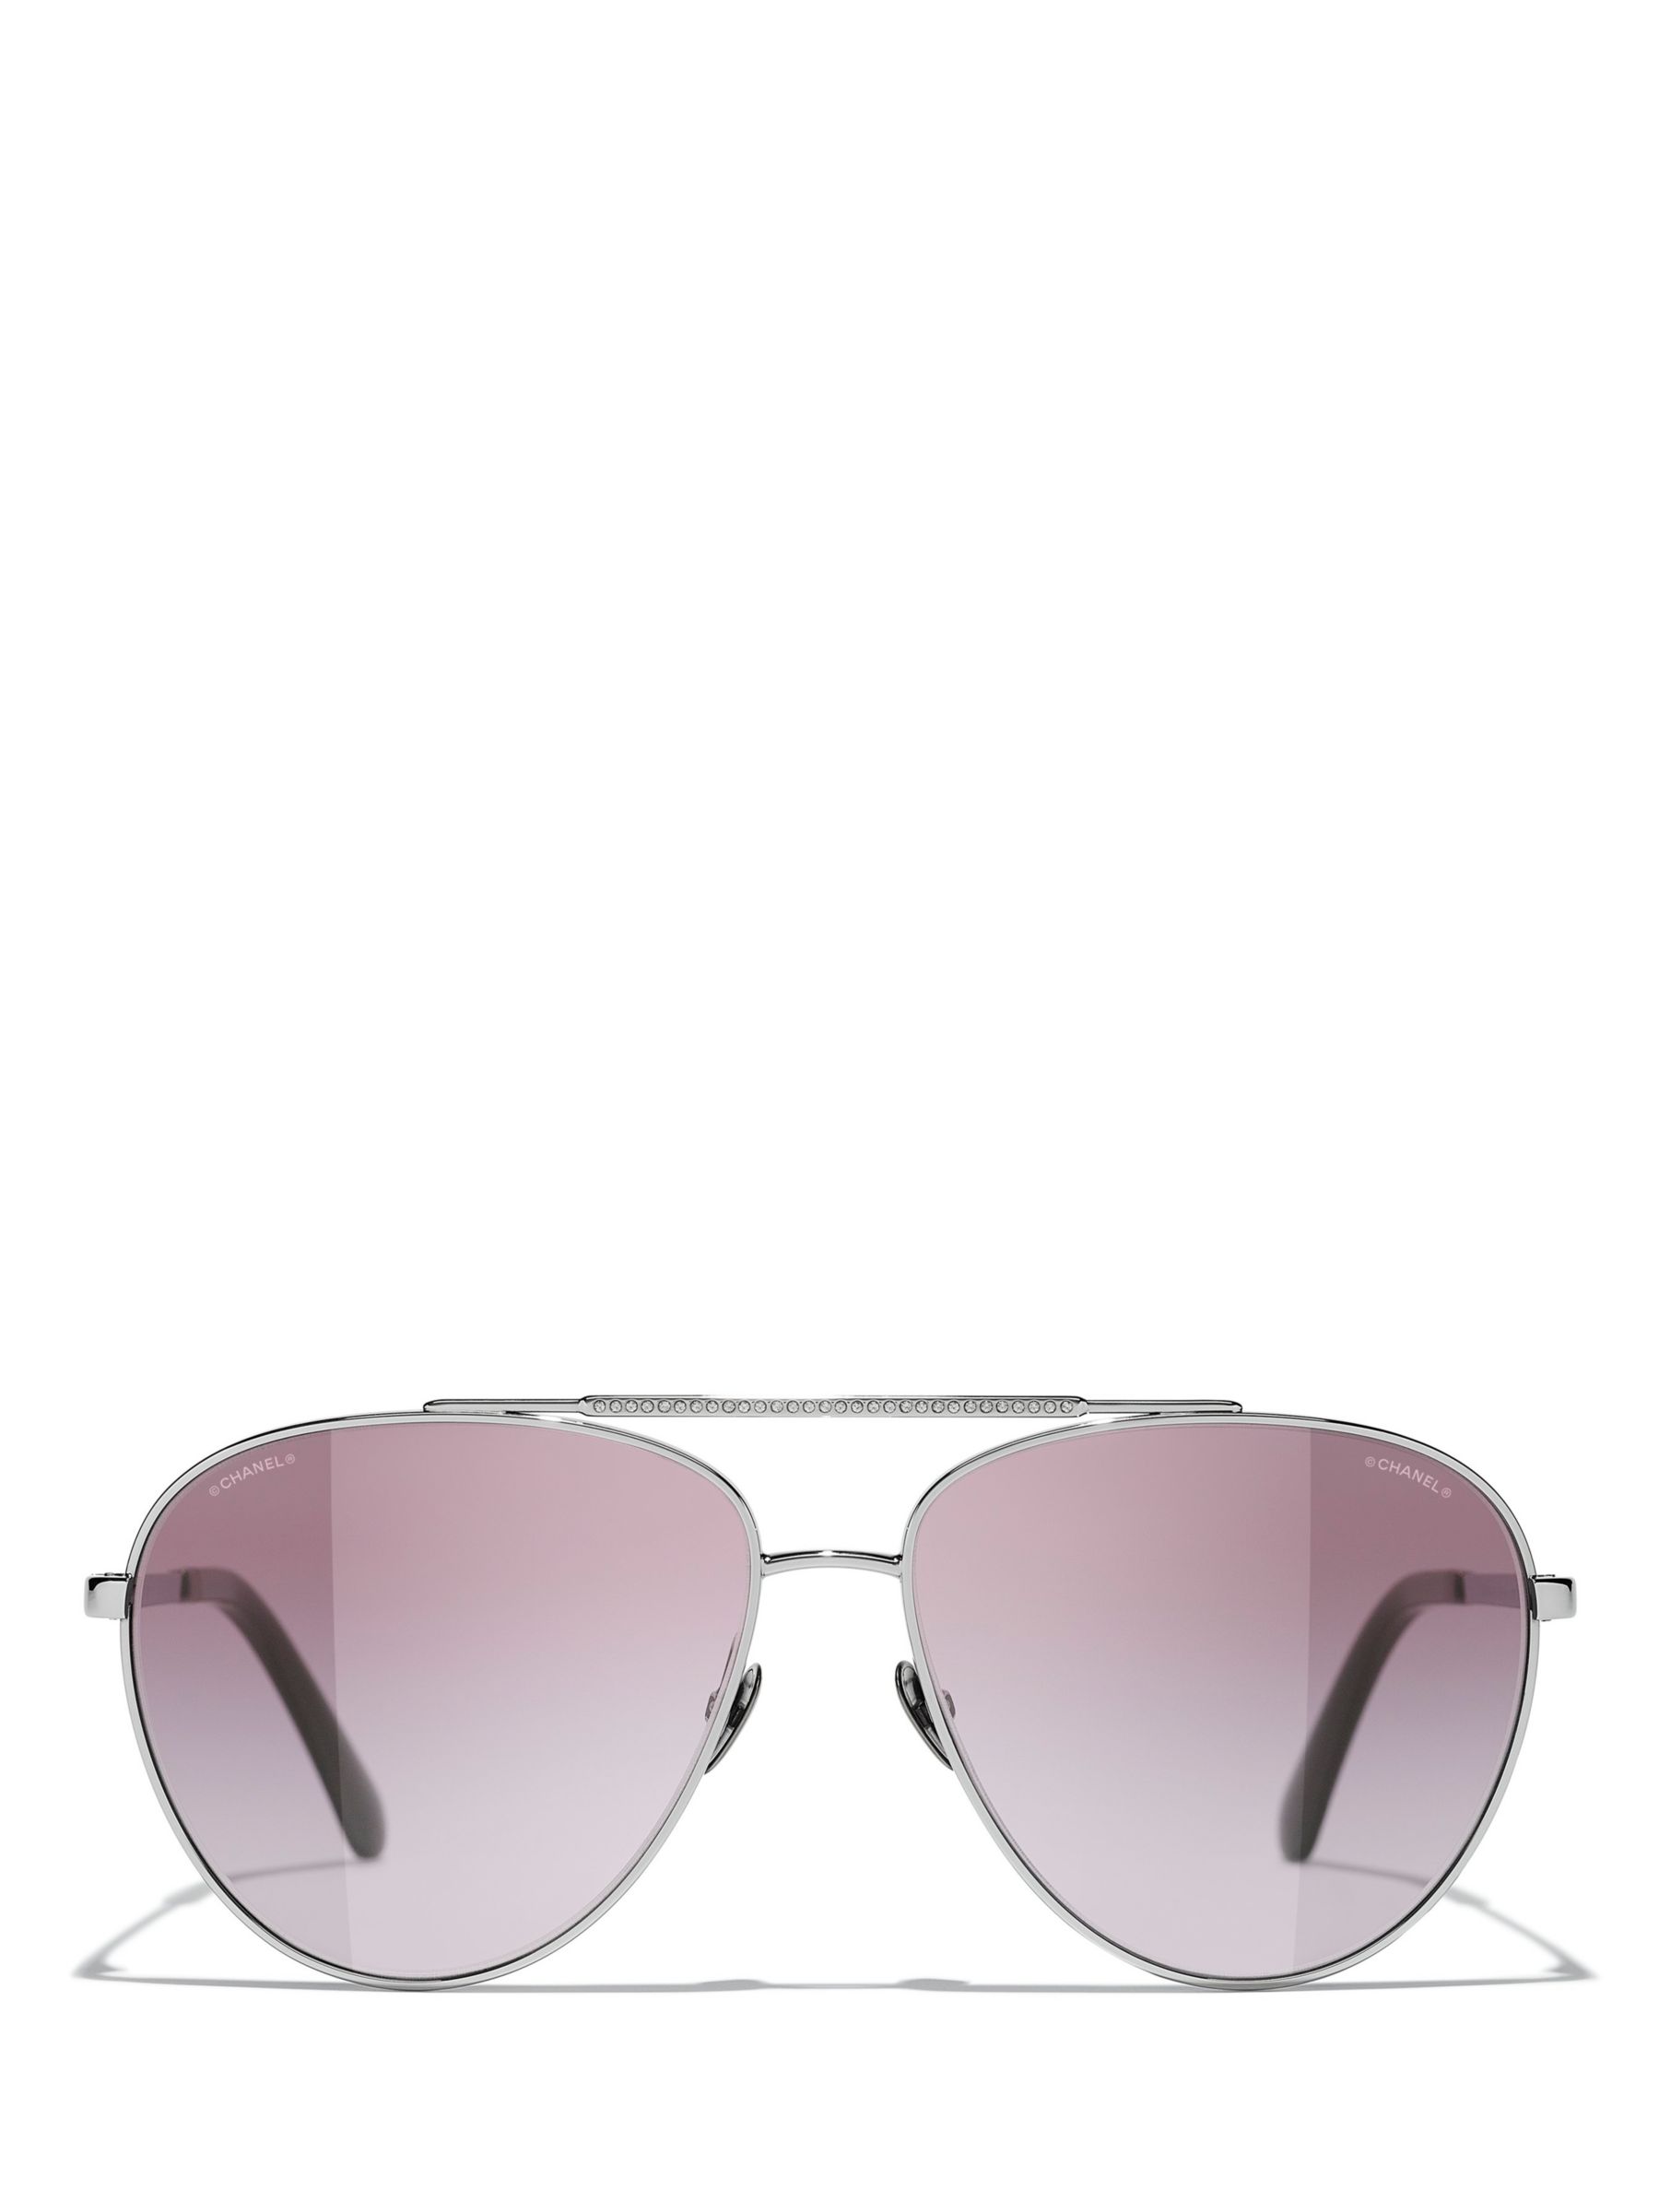 CHANEL Pilot Black Sunglasses for Women for sale